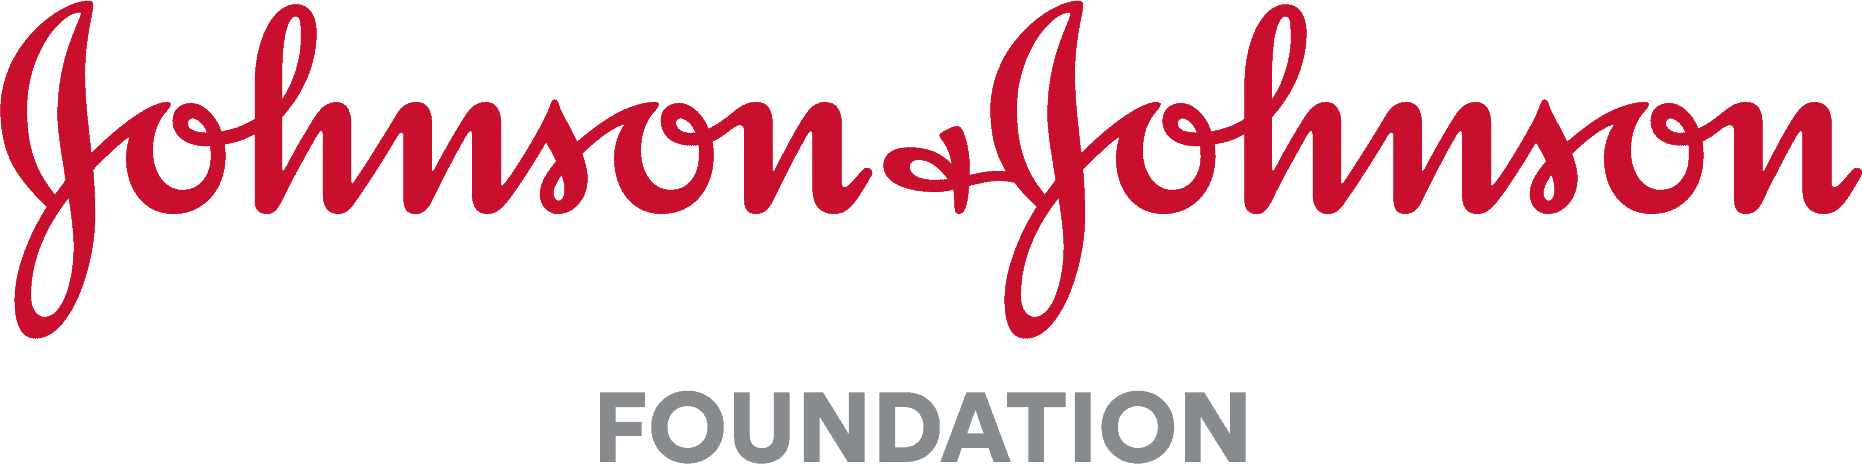 jnj_foundation_logo_RGB_Red